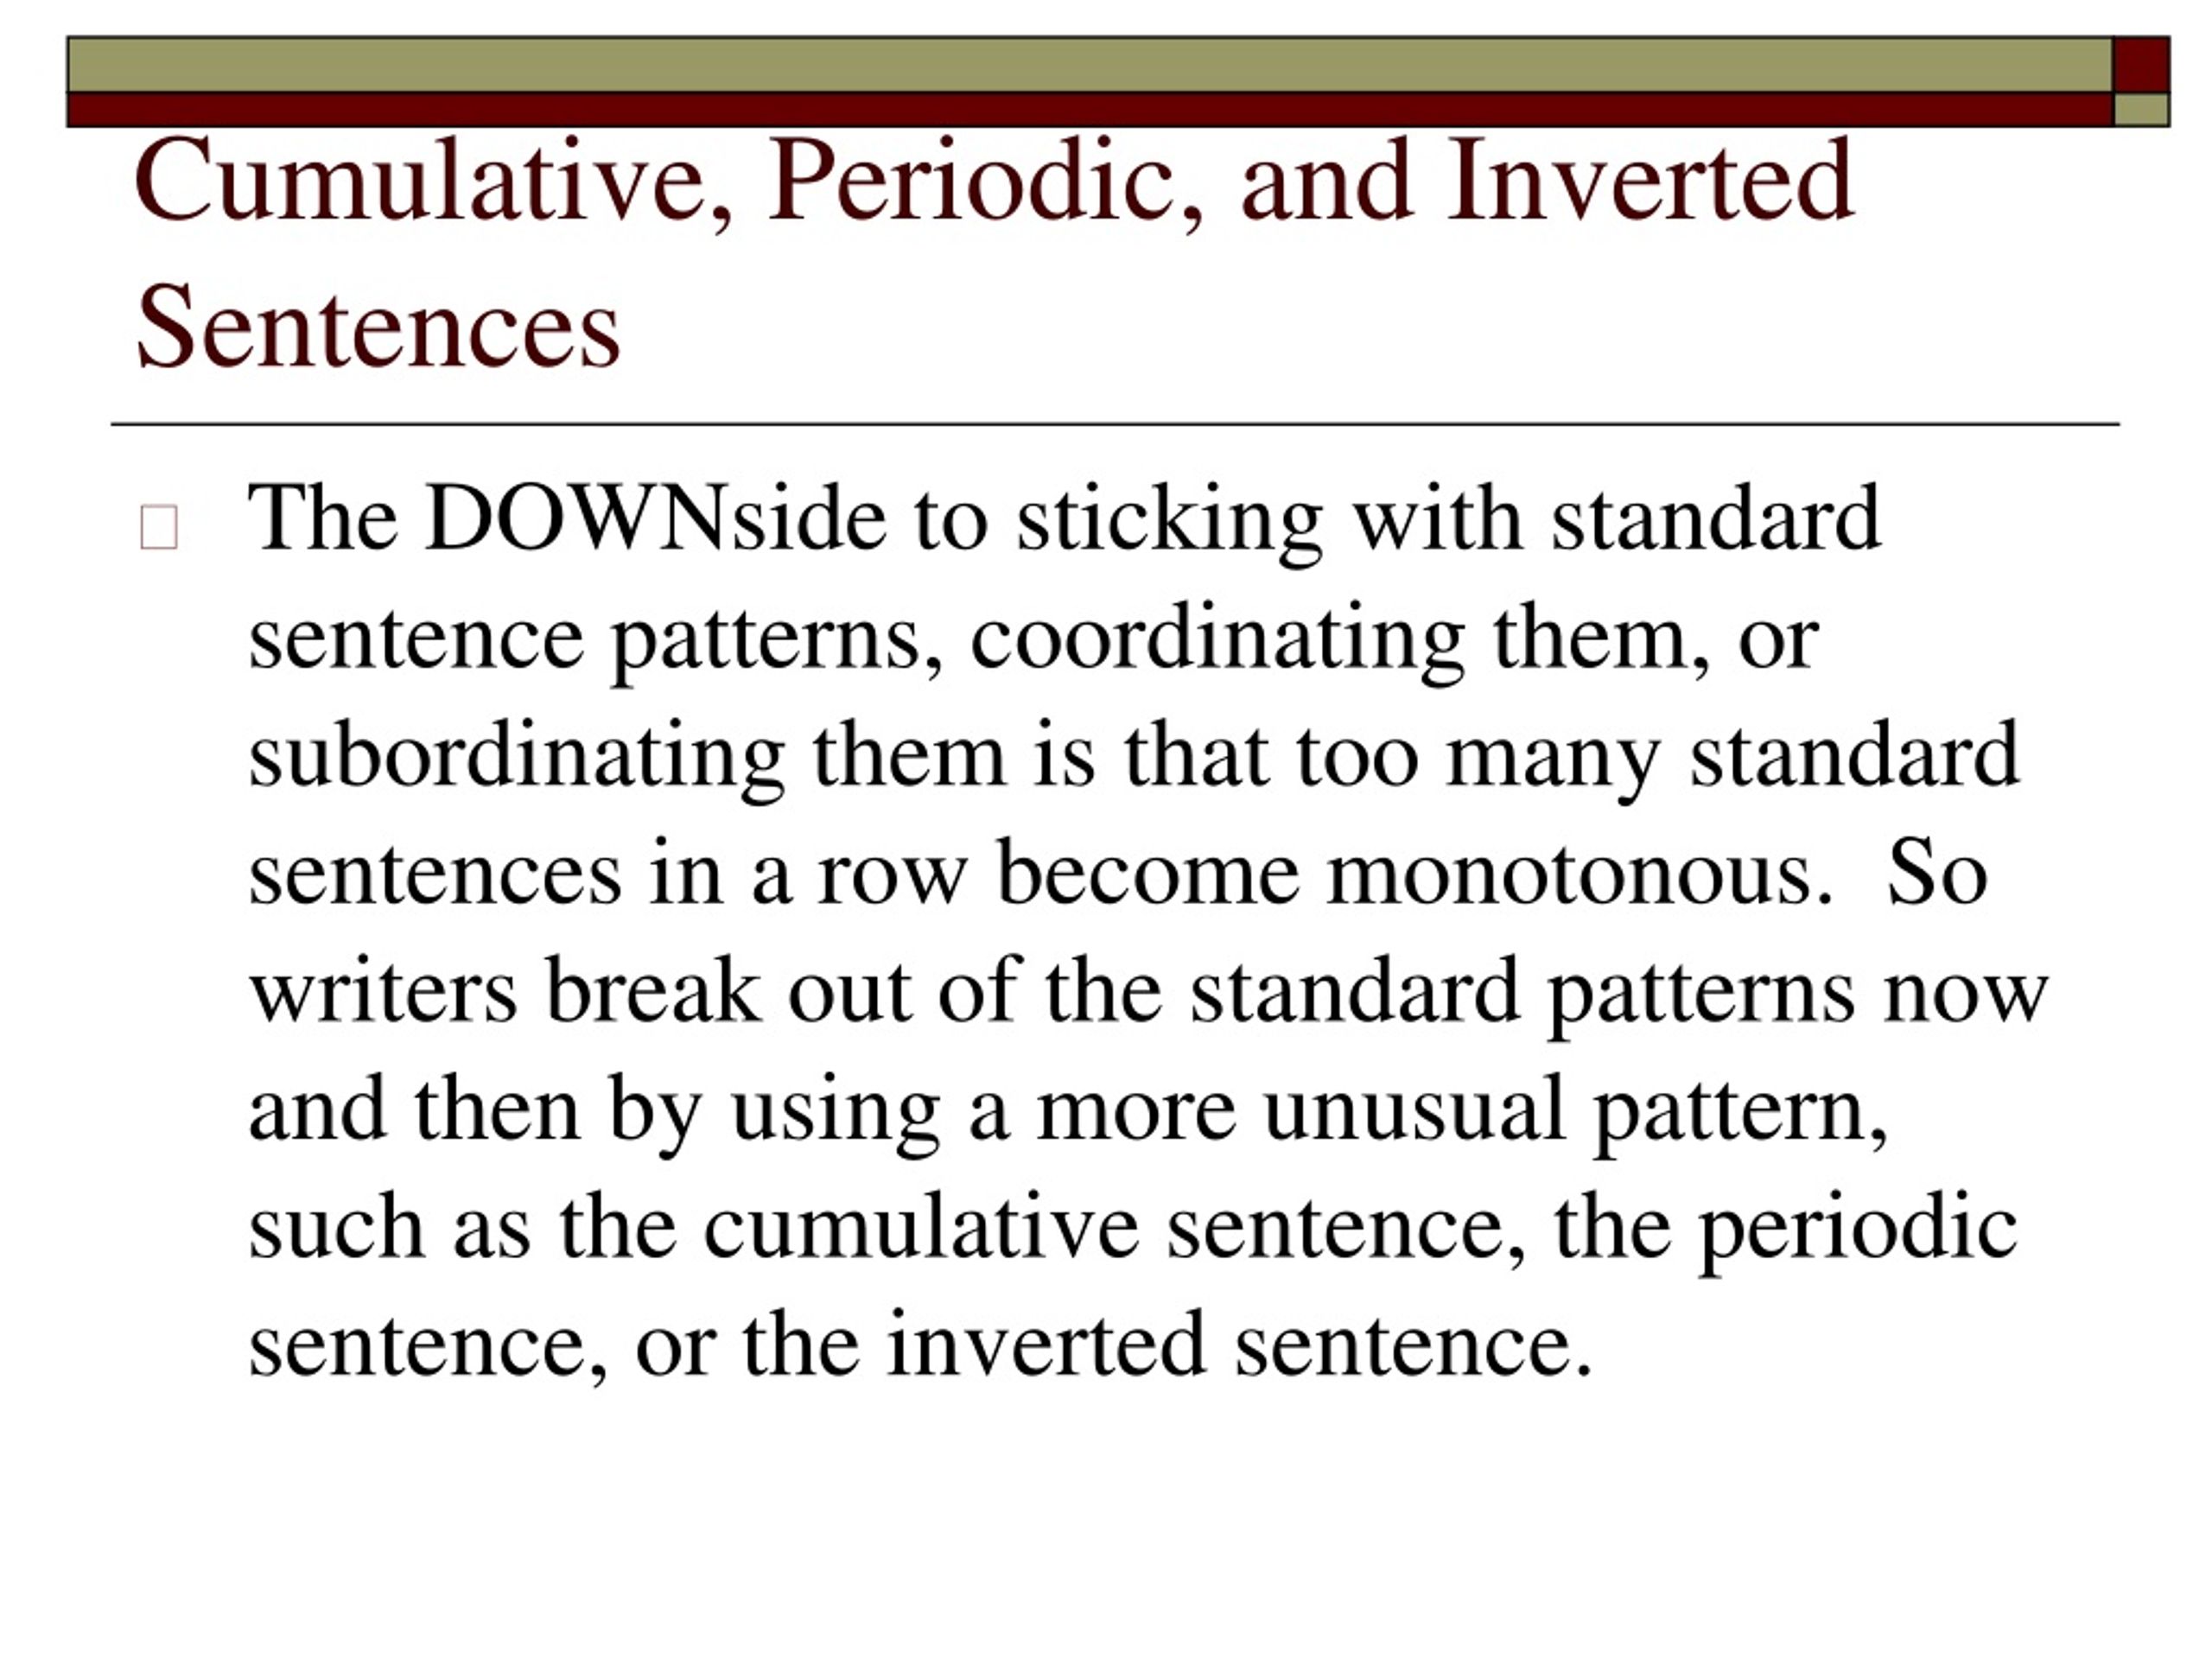 Worksheet On Cumulative And Periodic Sentences